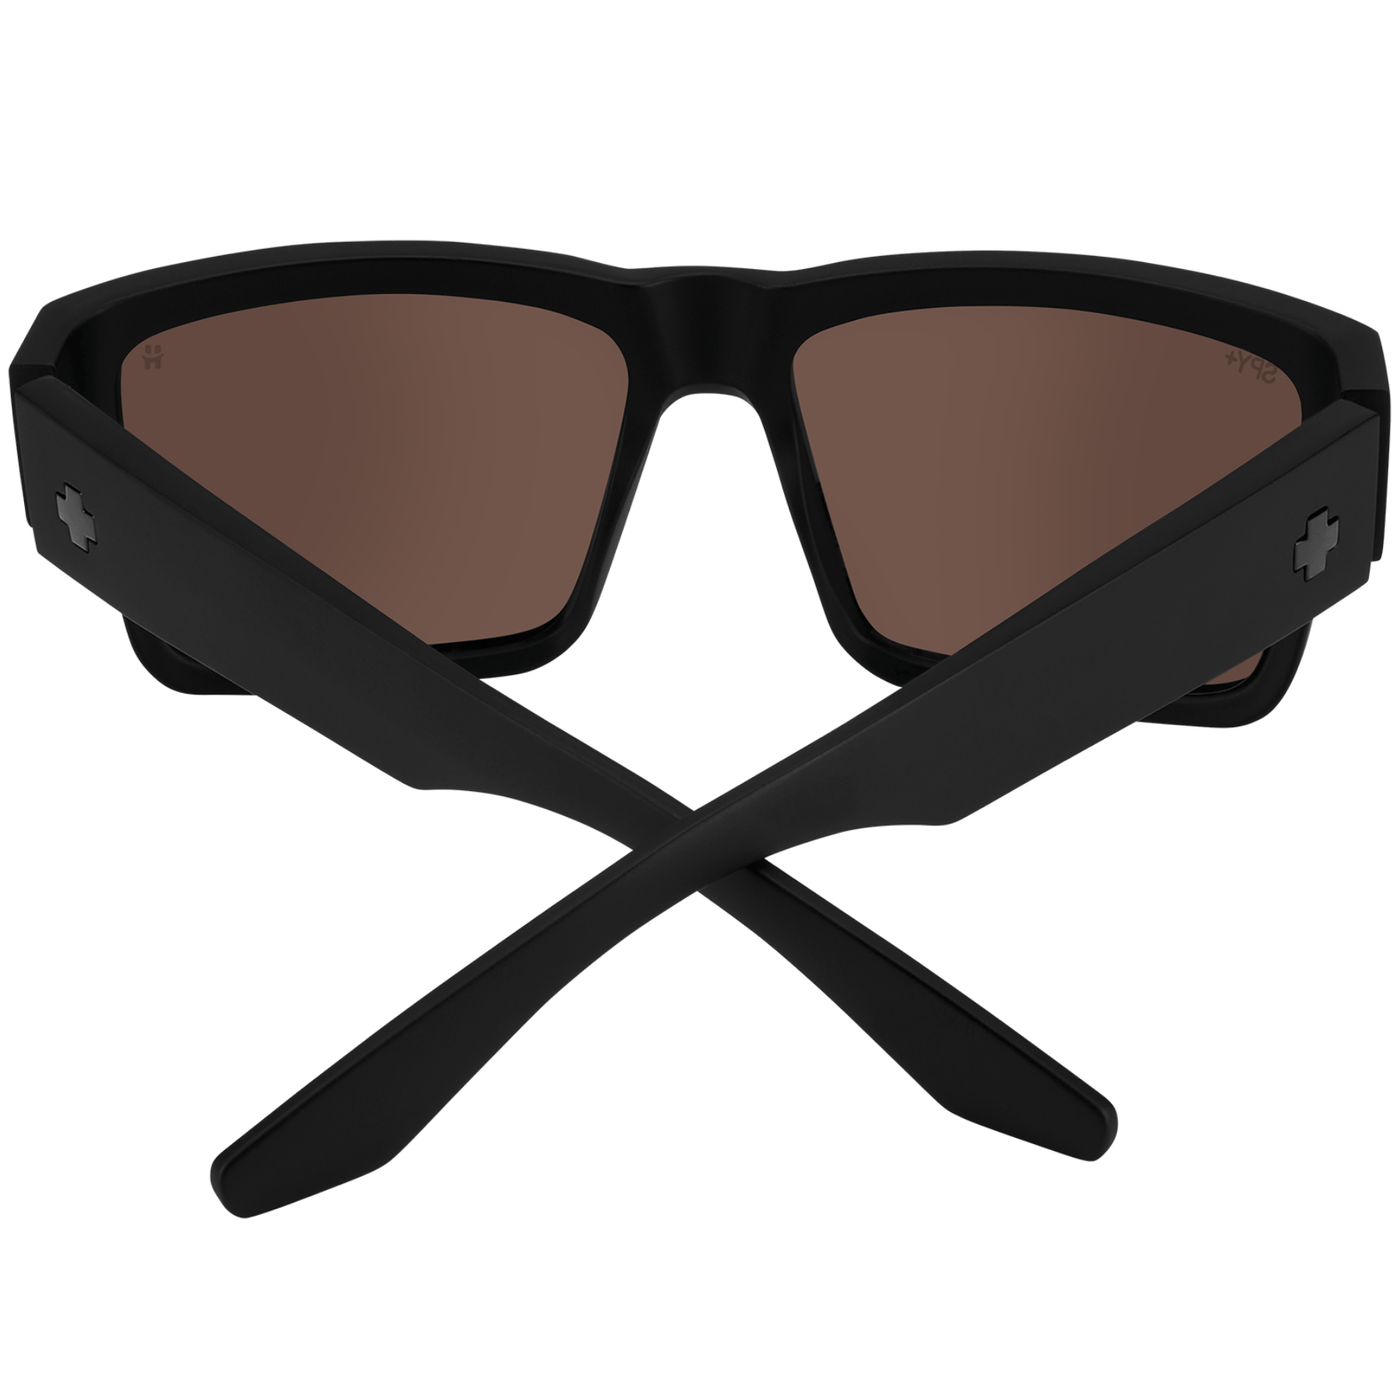 mirrored sunglasses by spy optic